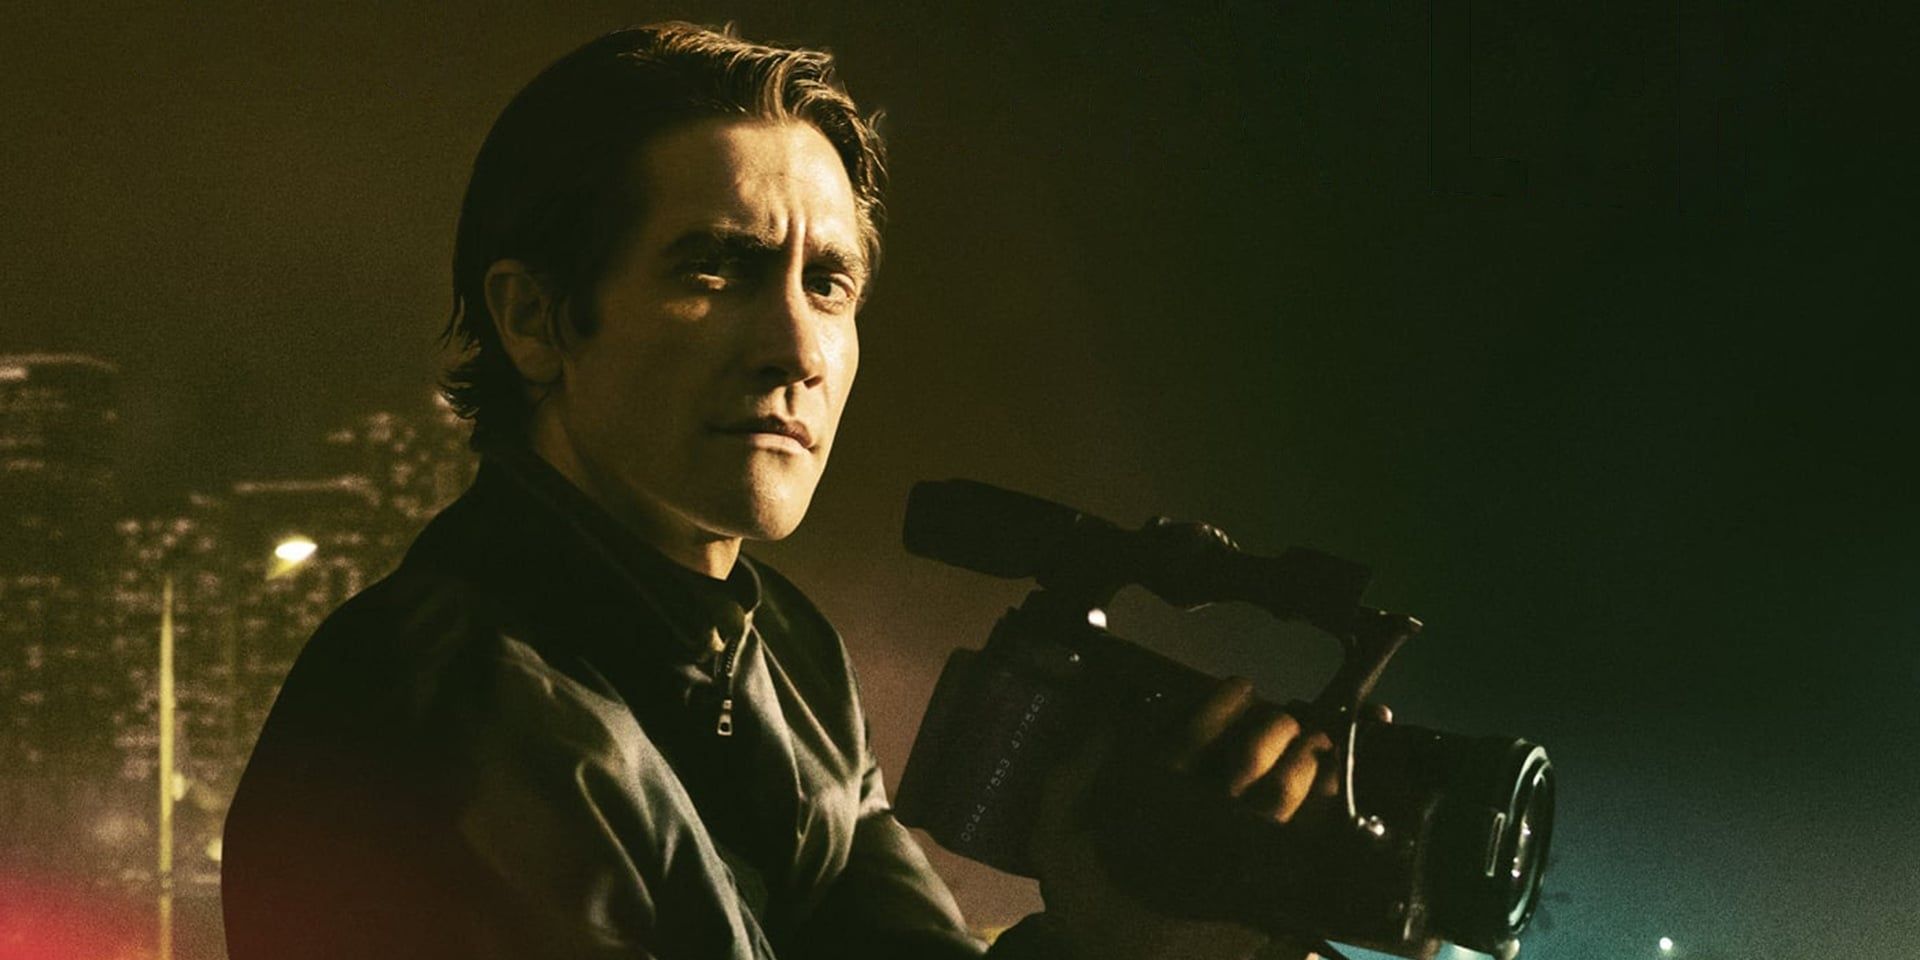 Jake Gyllenhaal in Nightcrawler holding a camera